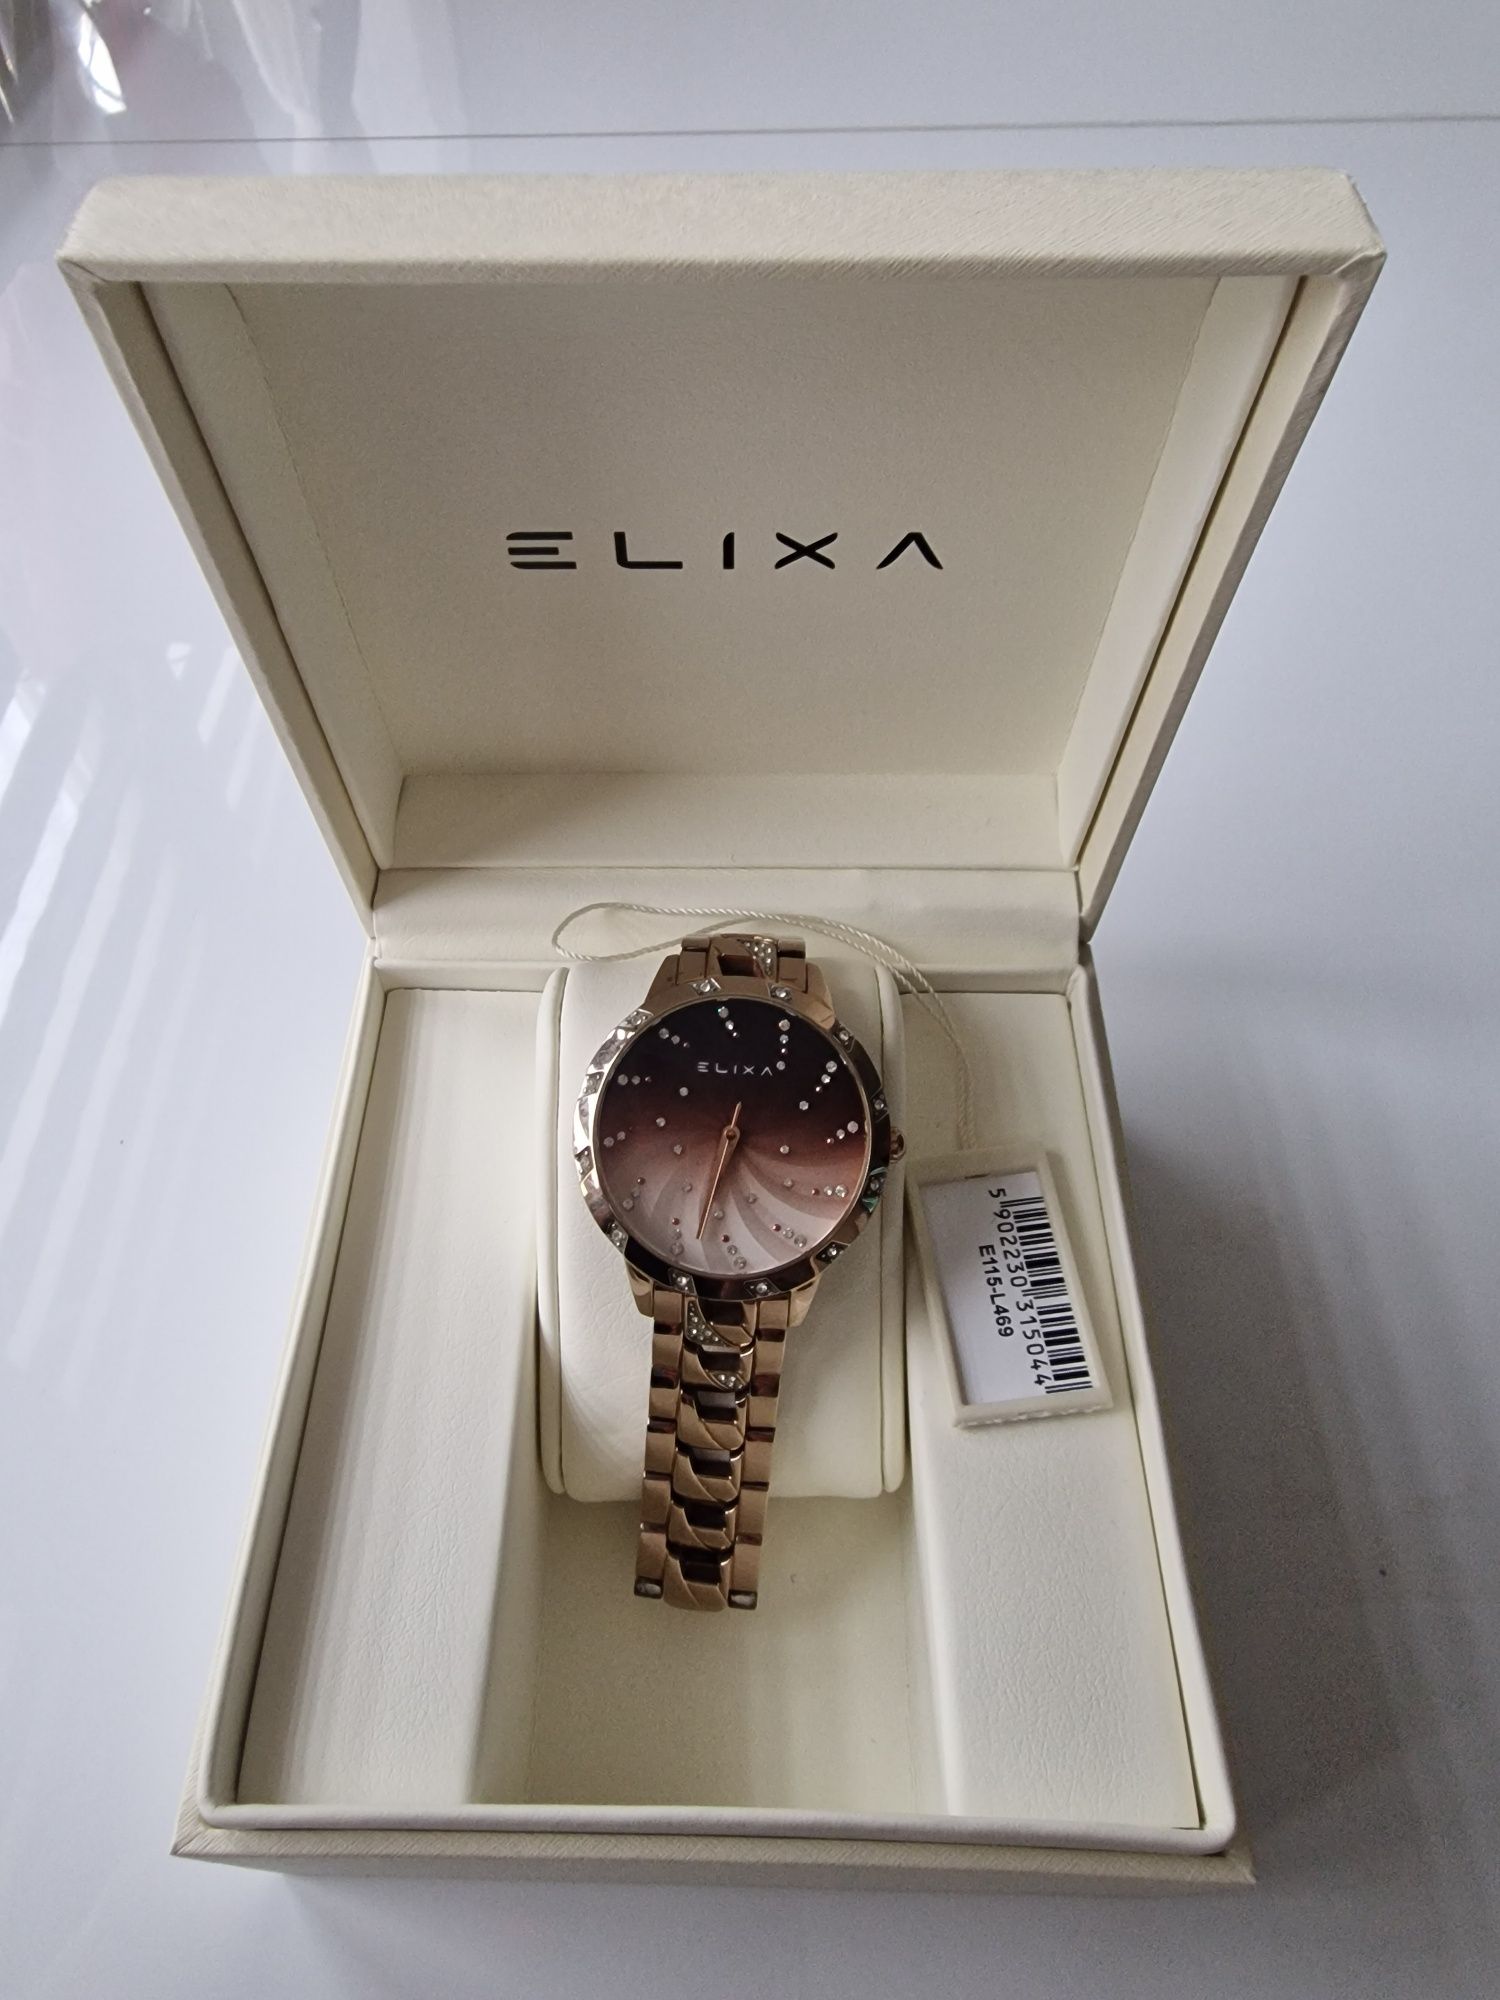 Sprzedam zegarek damski Elixa z Apatru